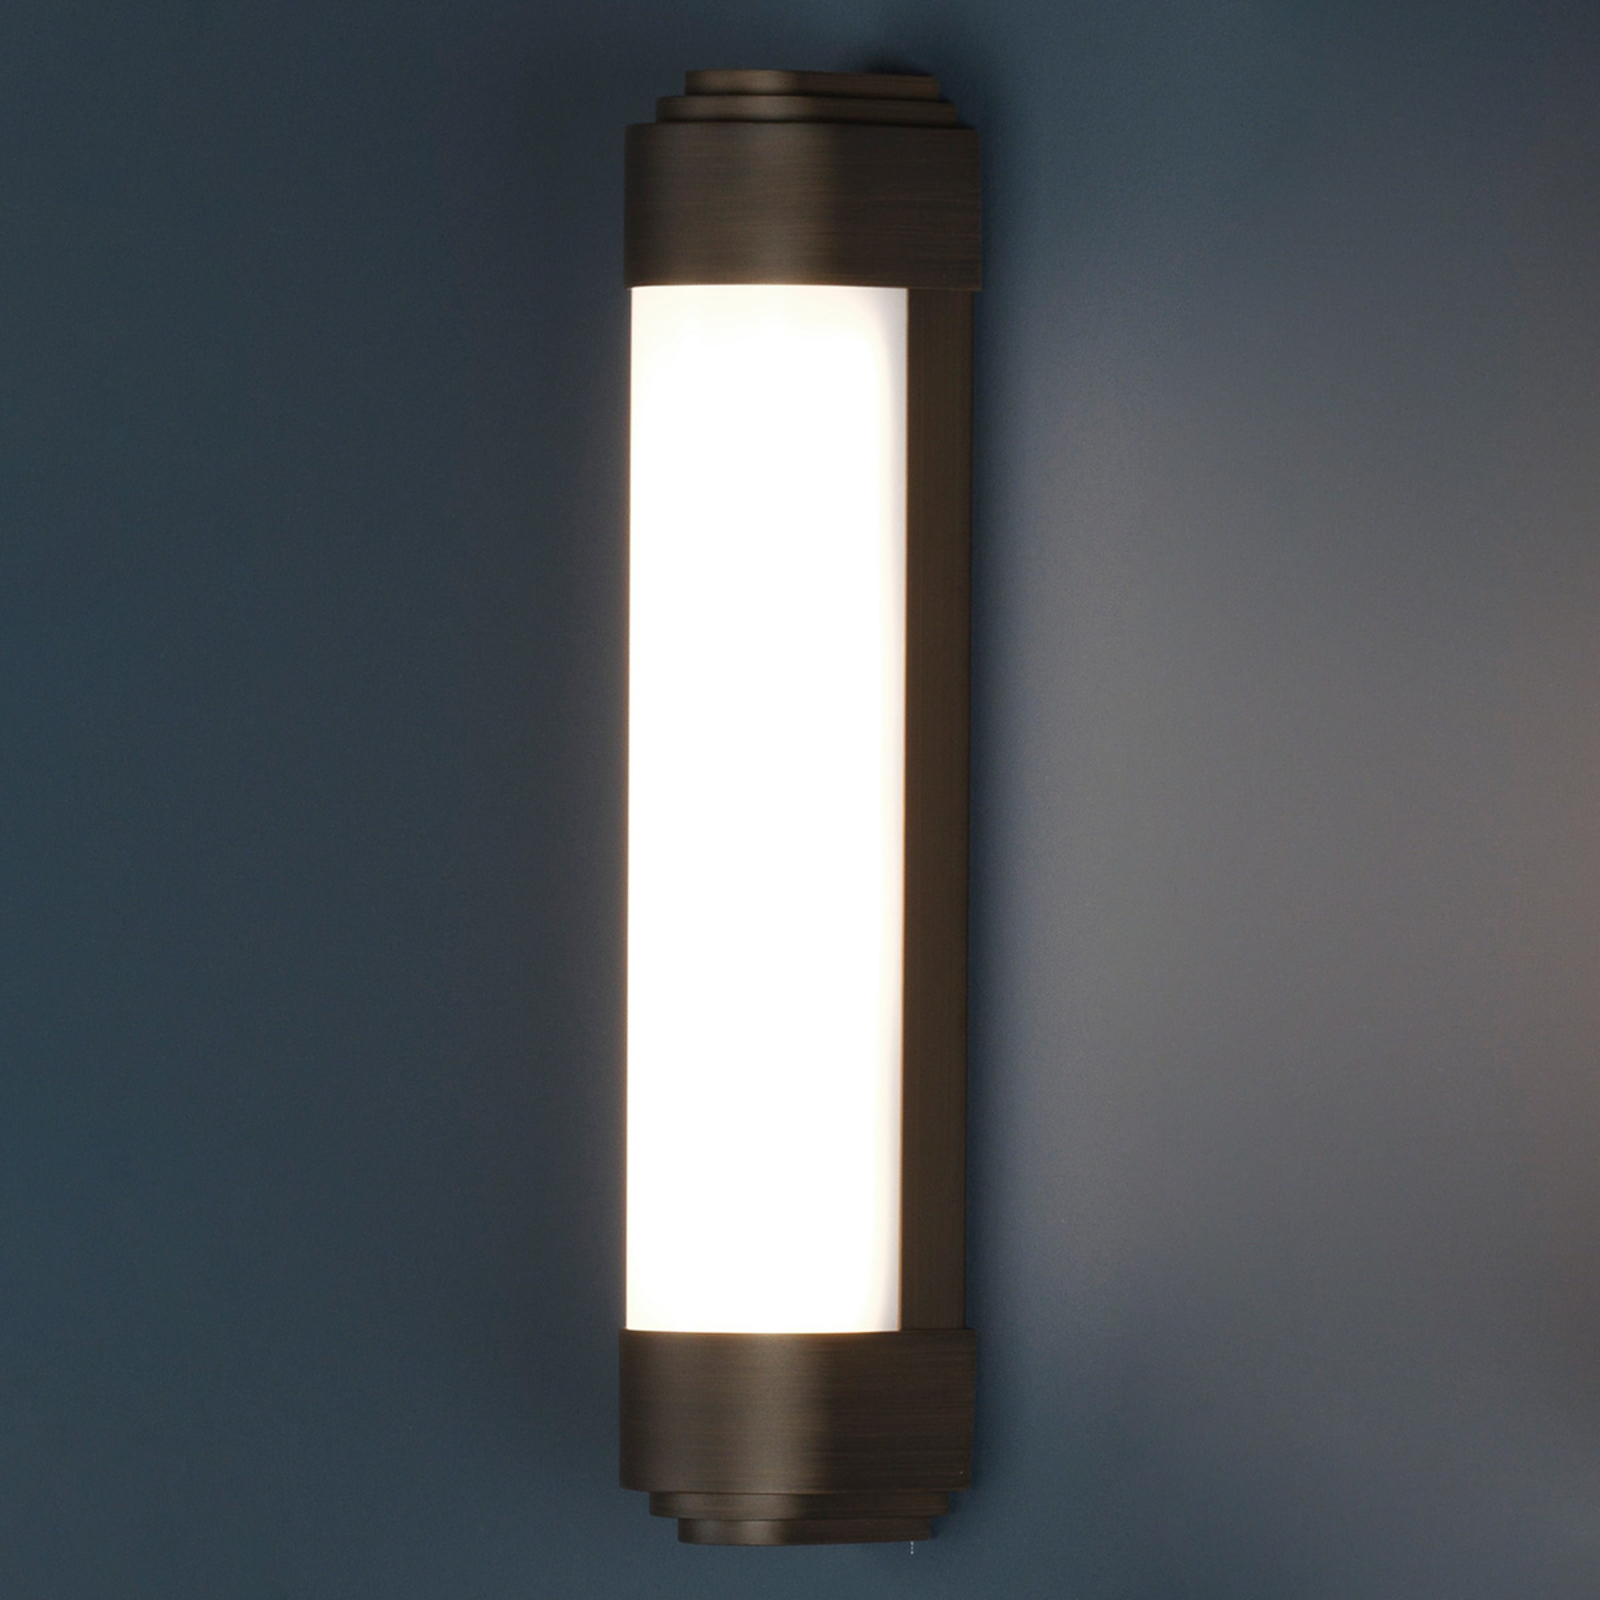 Astro Belgravia LED wall light, 40 cm